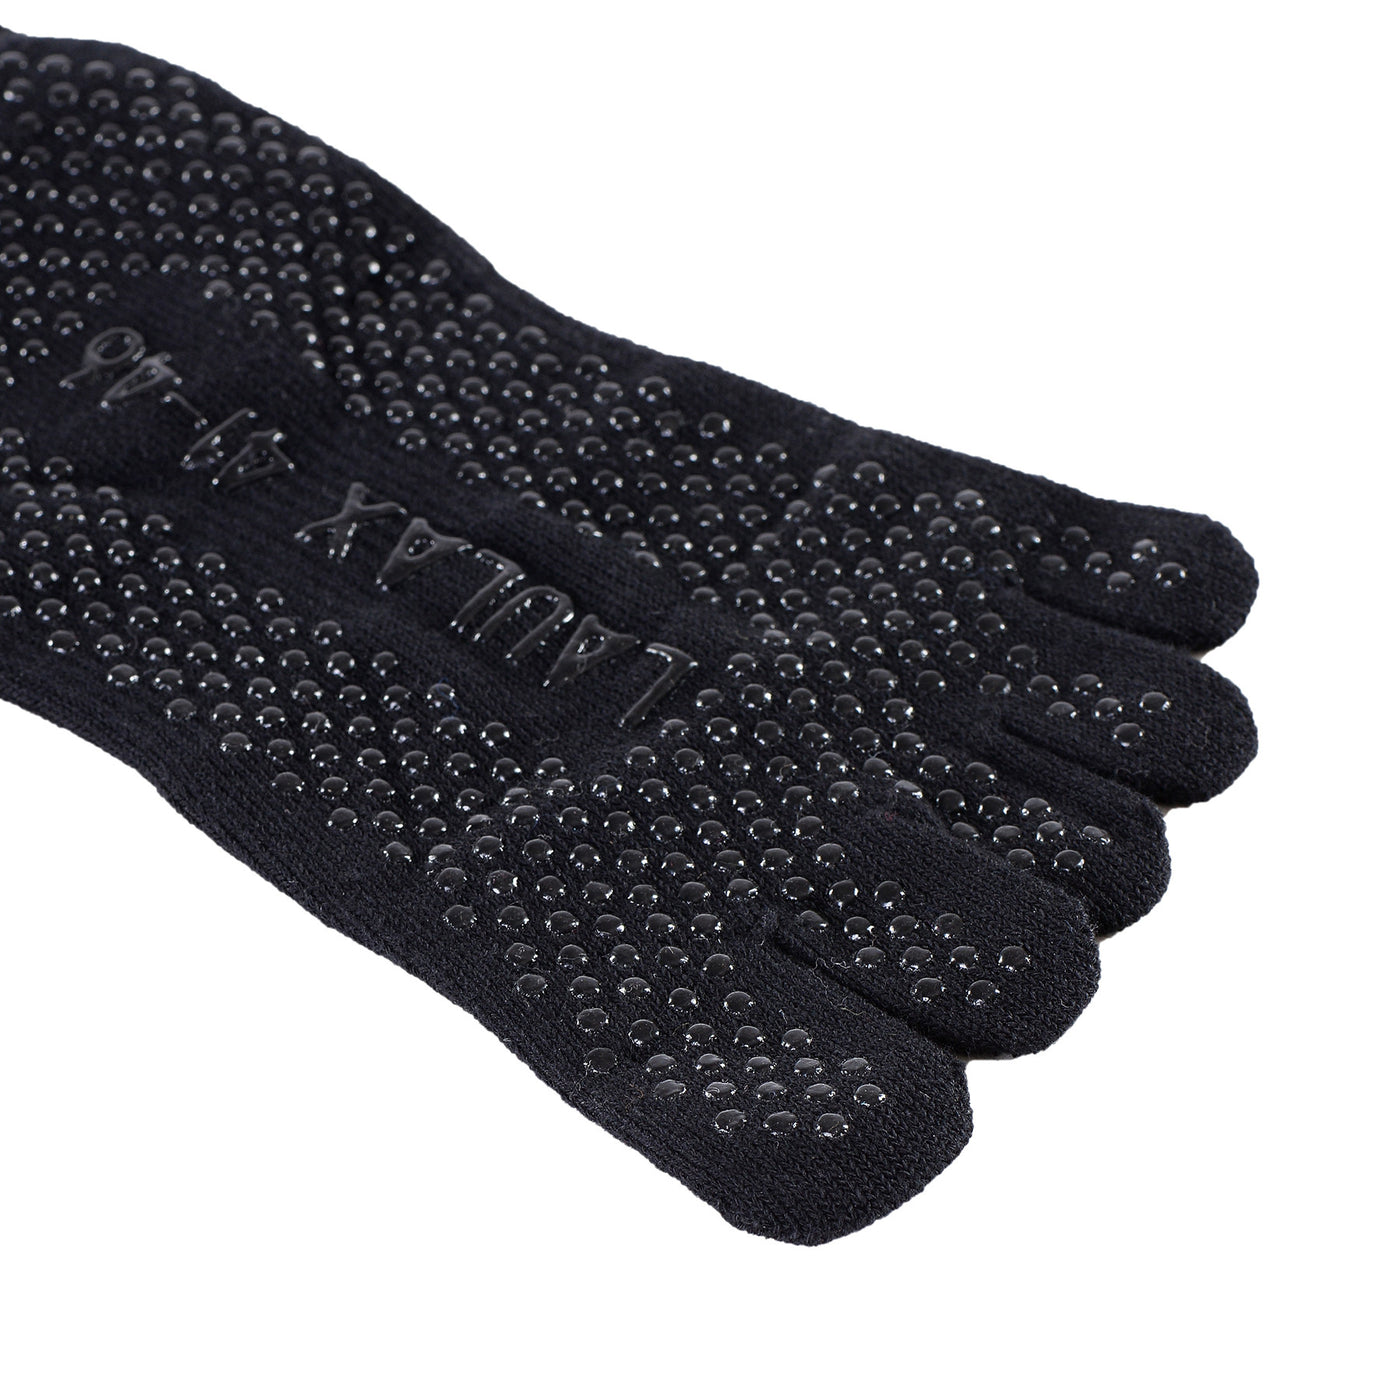 Laulax 2 Pairs Mens High Quality Professional Anti Slip Five Toes Yoga Socks, Black, Size UK 7 - 11 / Europe 41 - 46